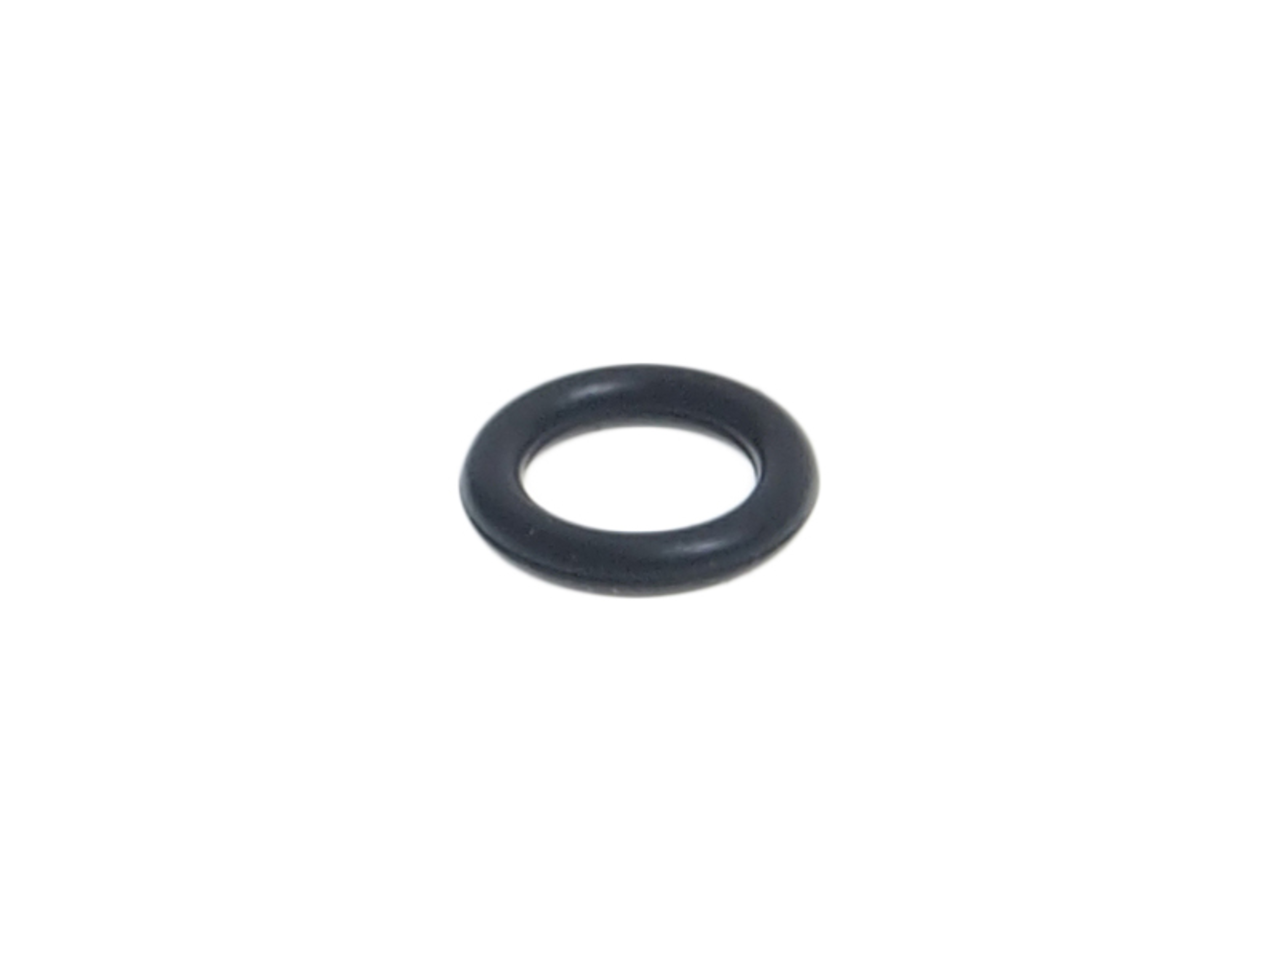 Ремкомплект для пневмогайковерта JTC-7657 (02) уплотнительное кольцо штока курка JTC